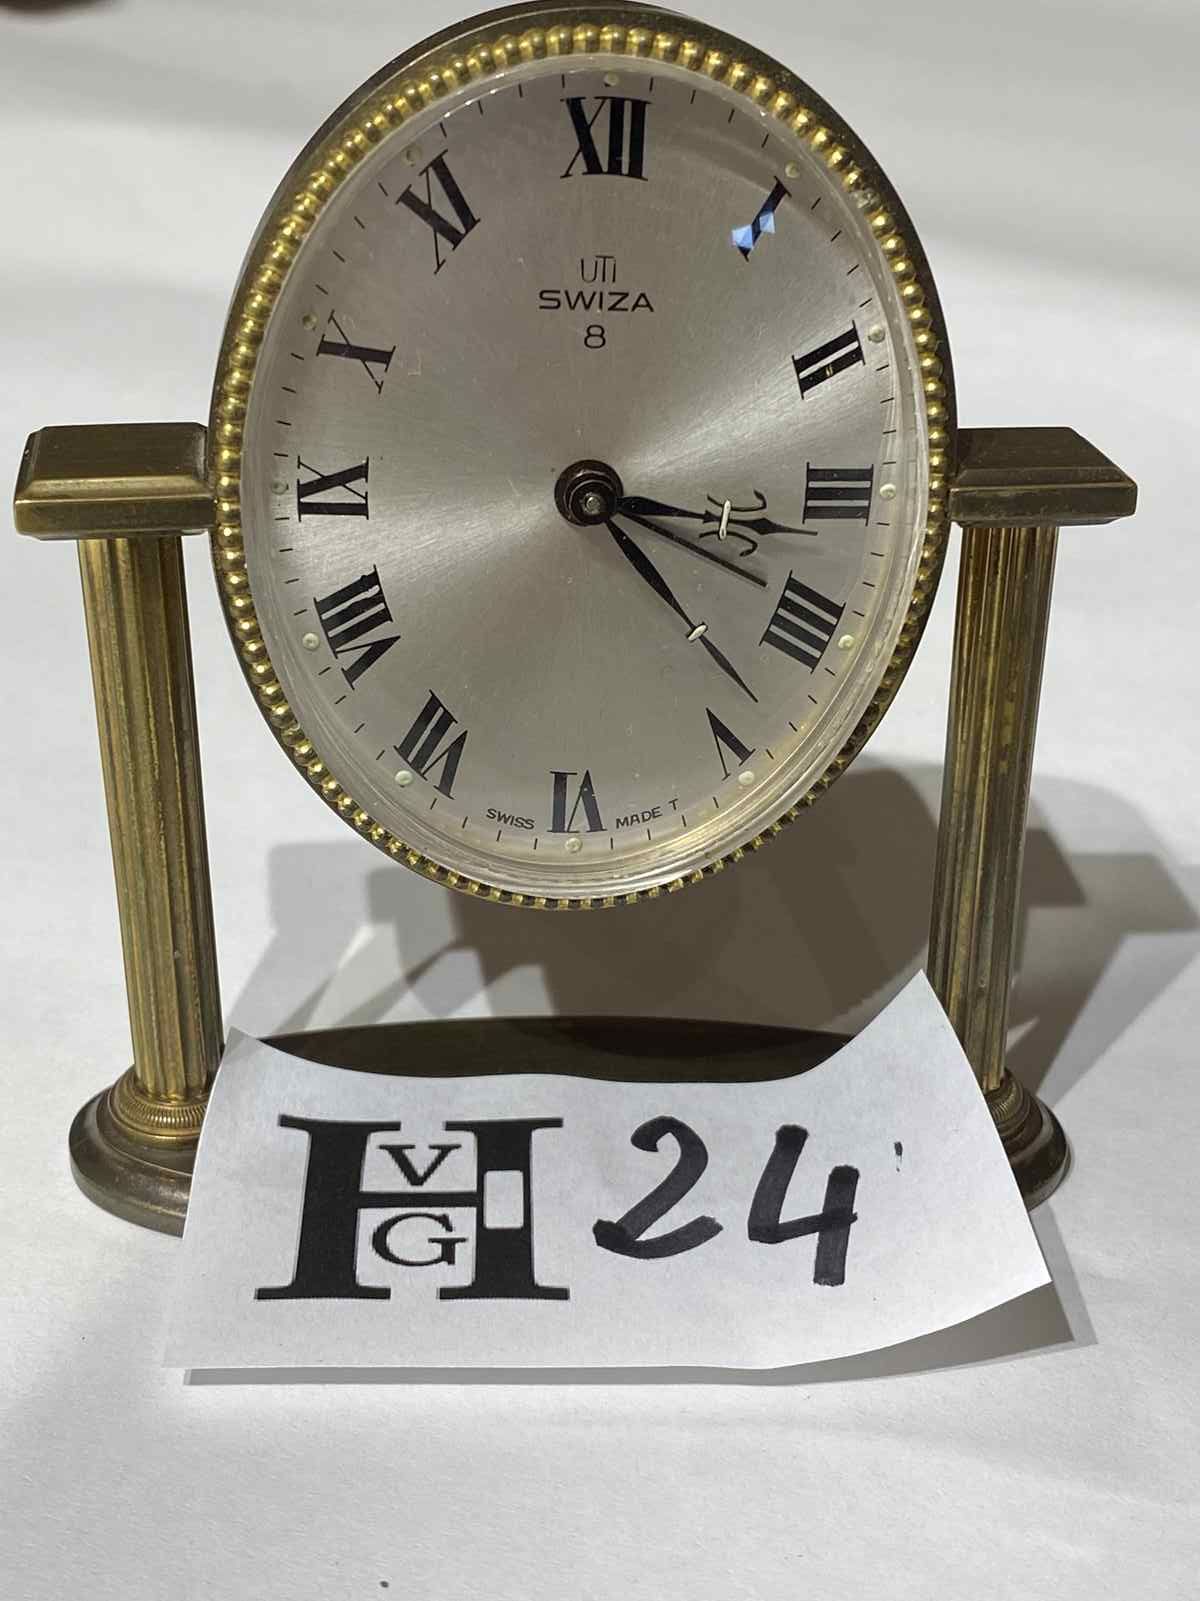 Mise à prix 20 € 1 Small Swiss alarm clock - UTI SWYZA 8